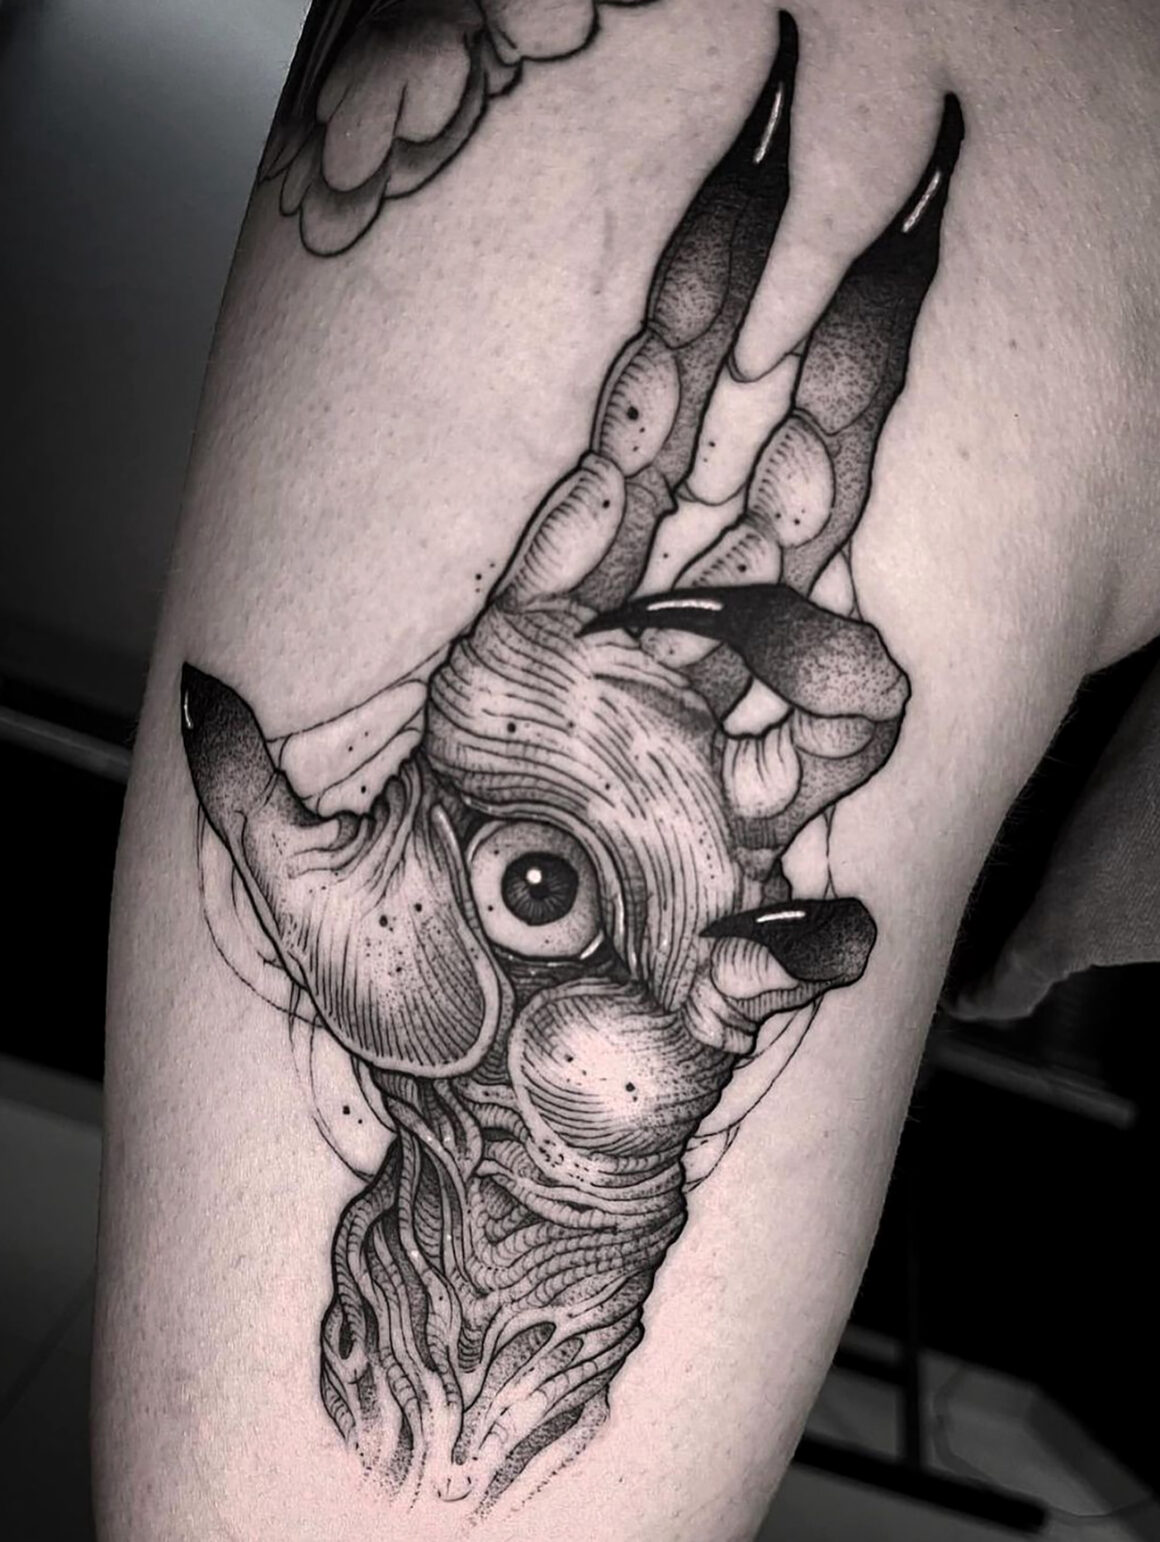 Tattoo by Flesher, @flesher_tattooer